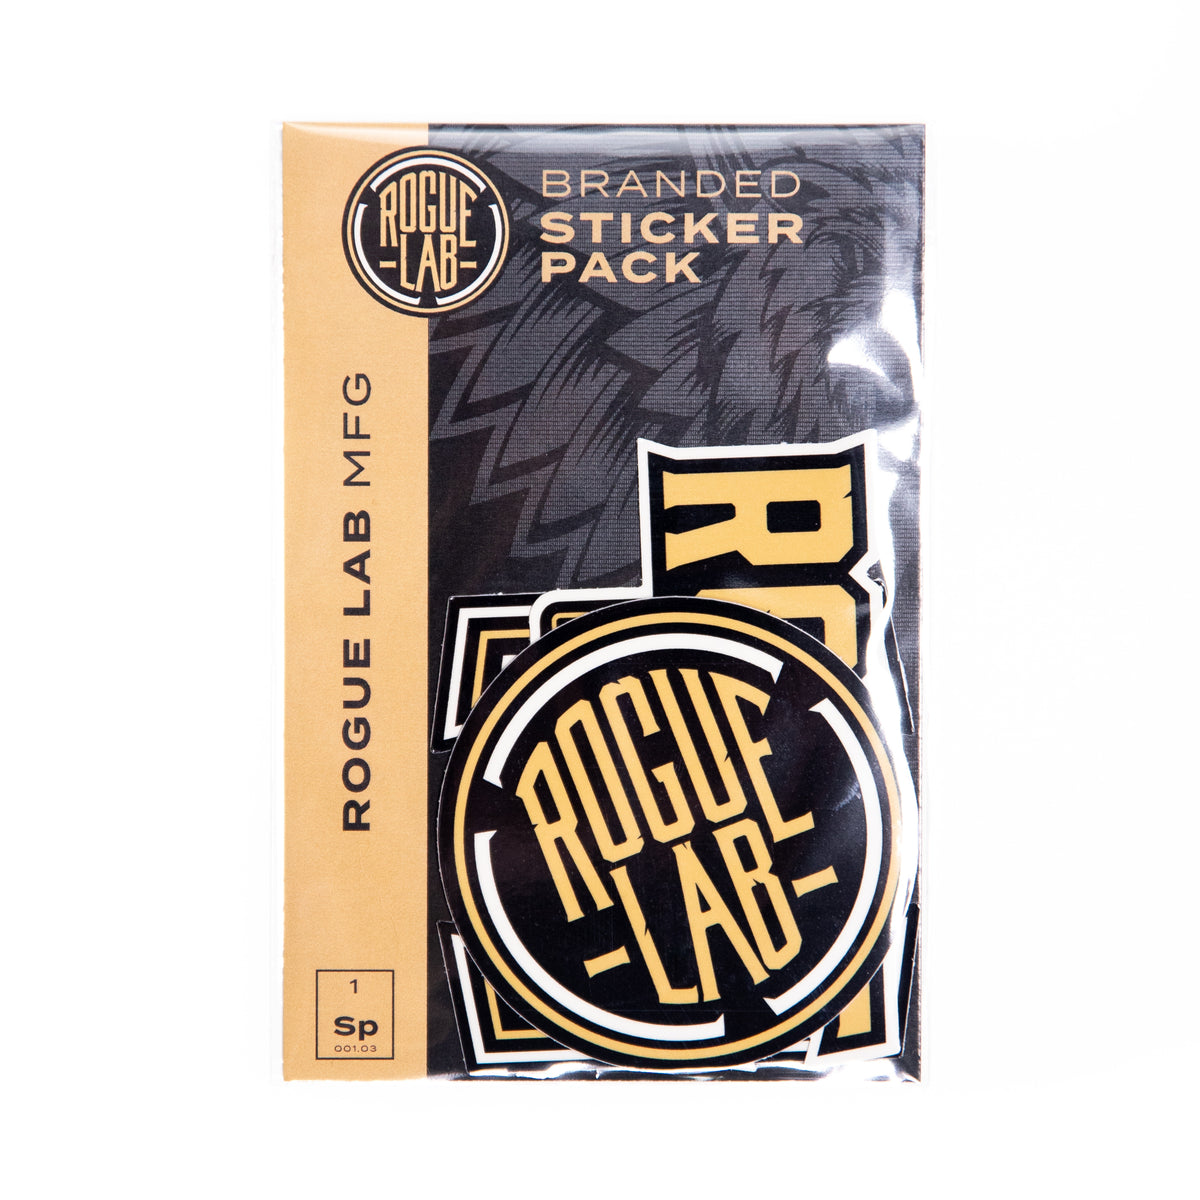 Branded Sticker Pack